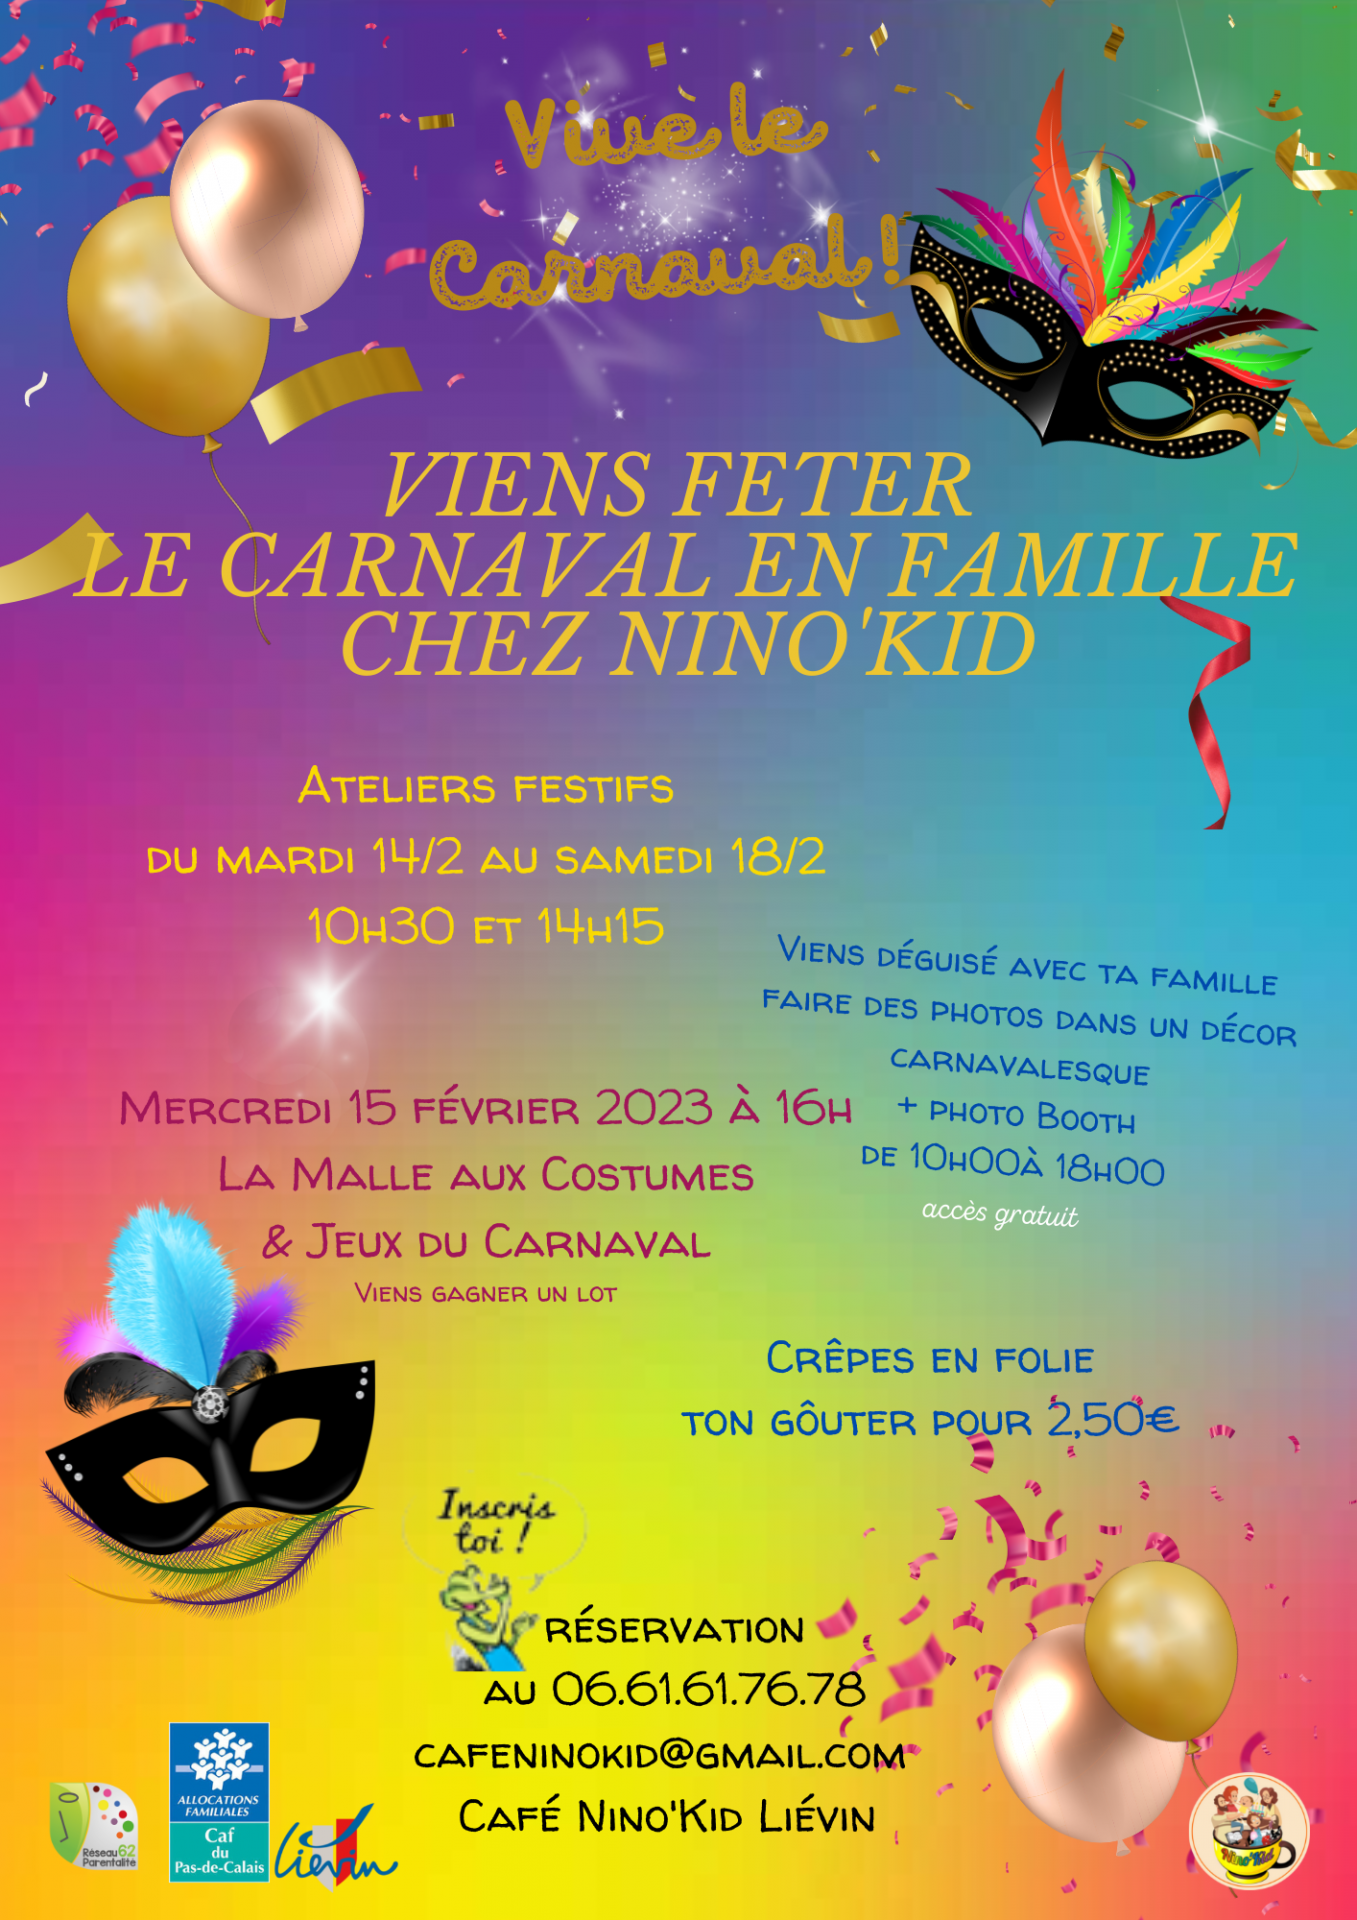 Carnaval 2023 nino kid